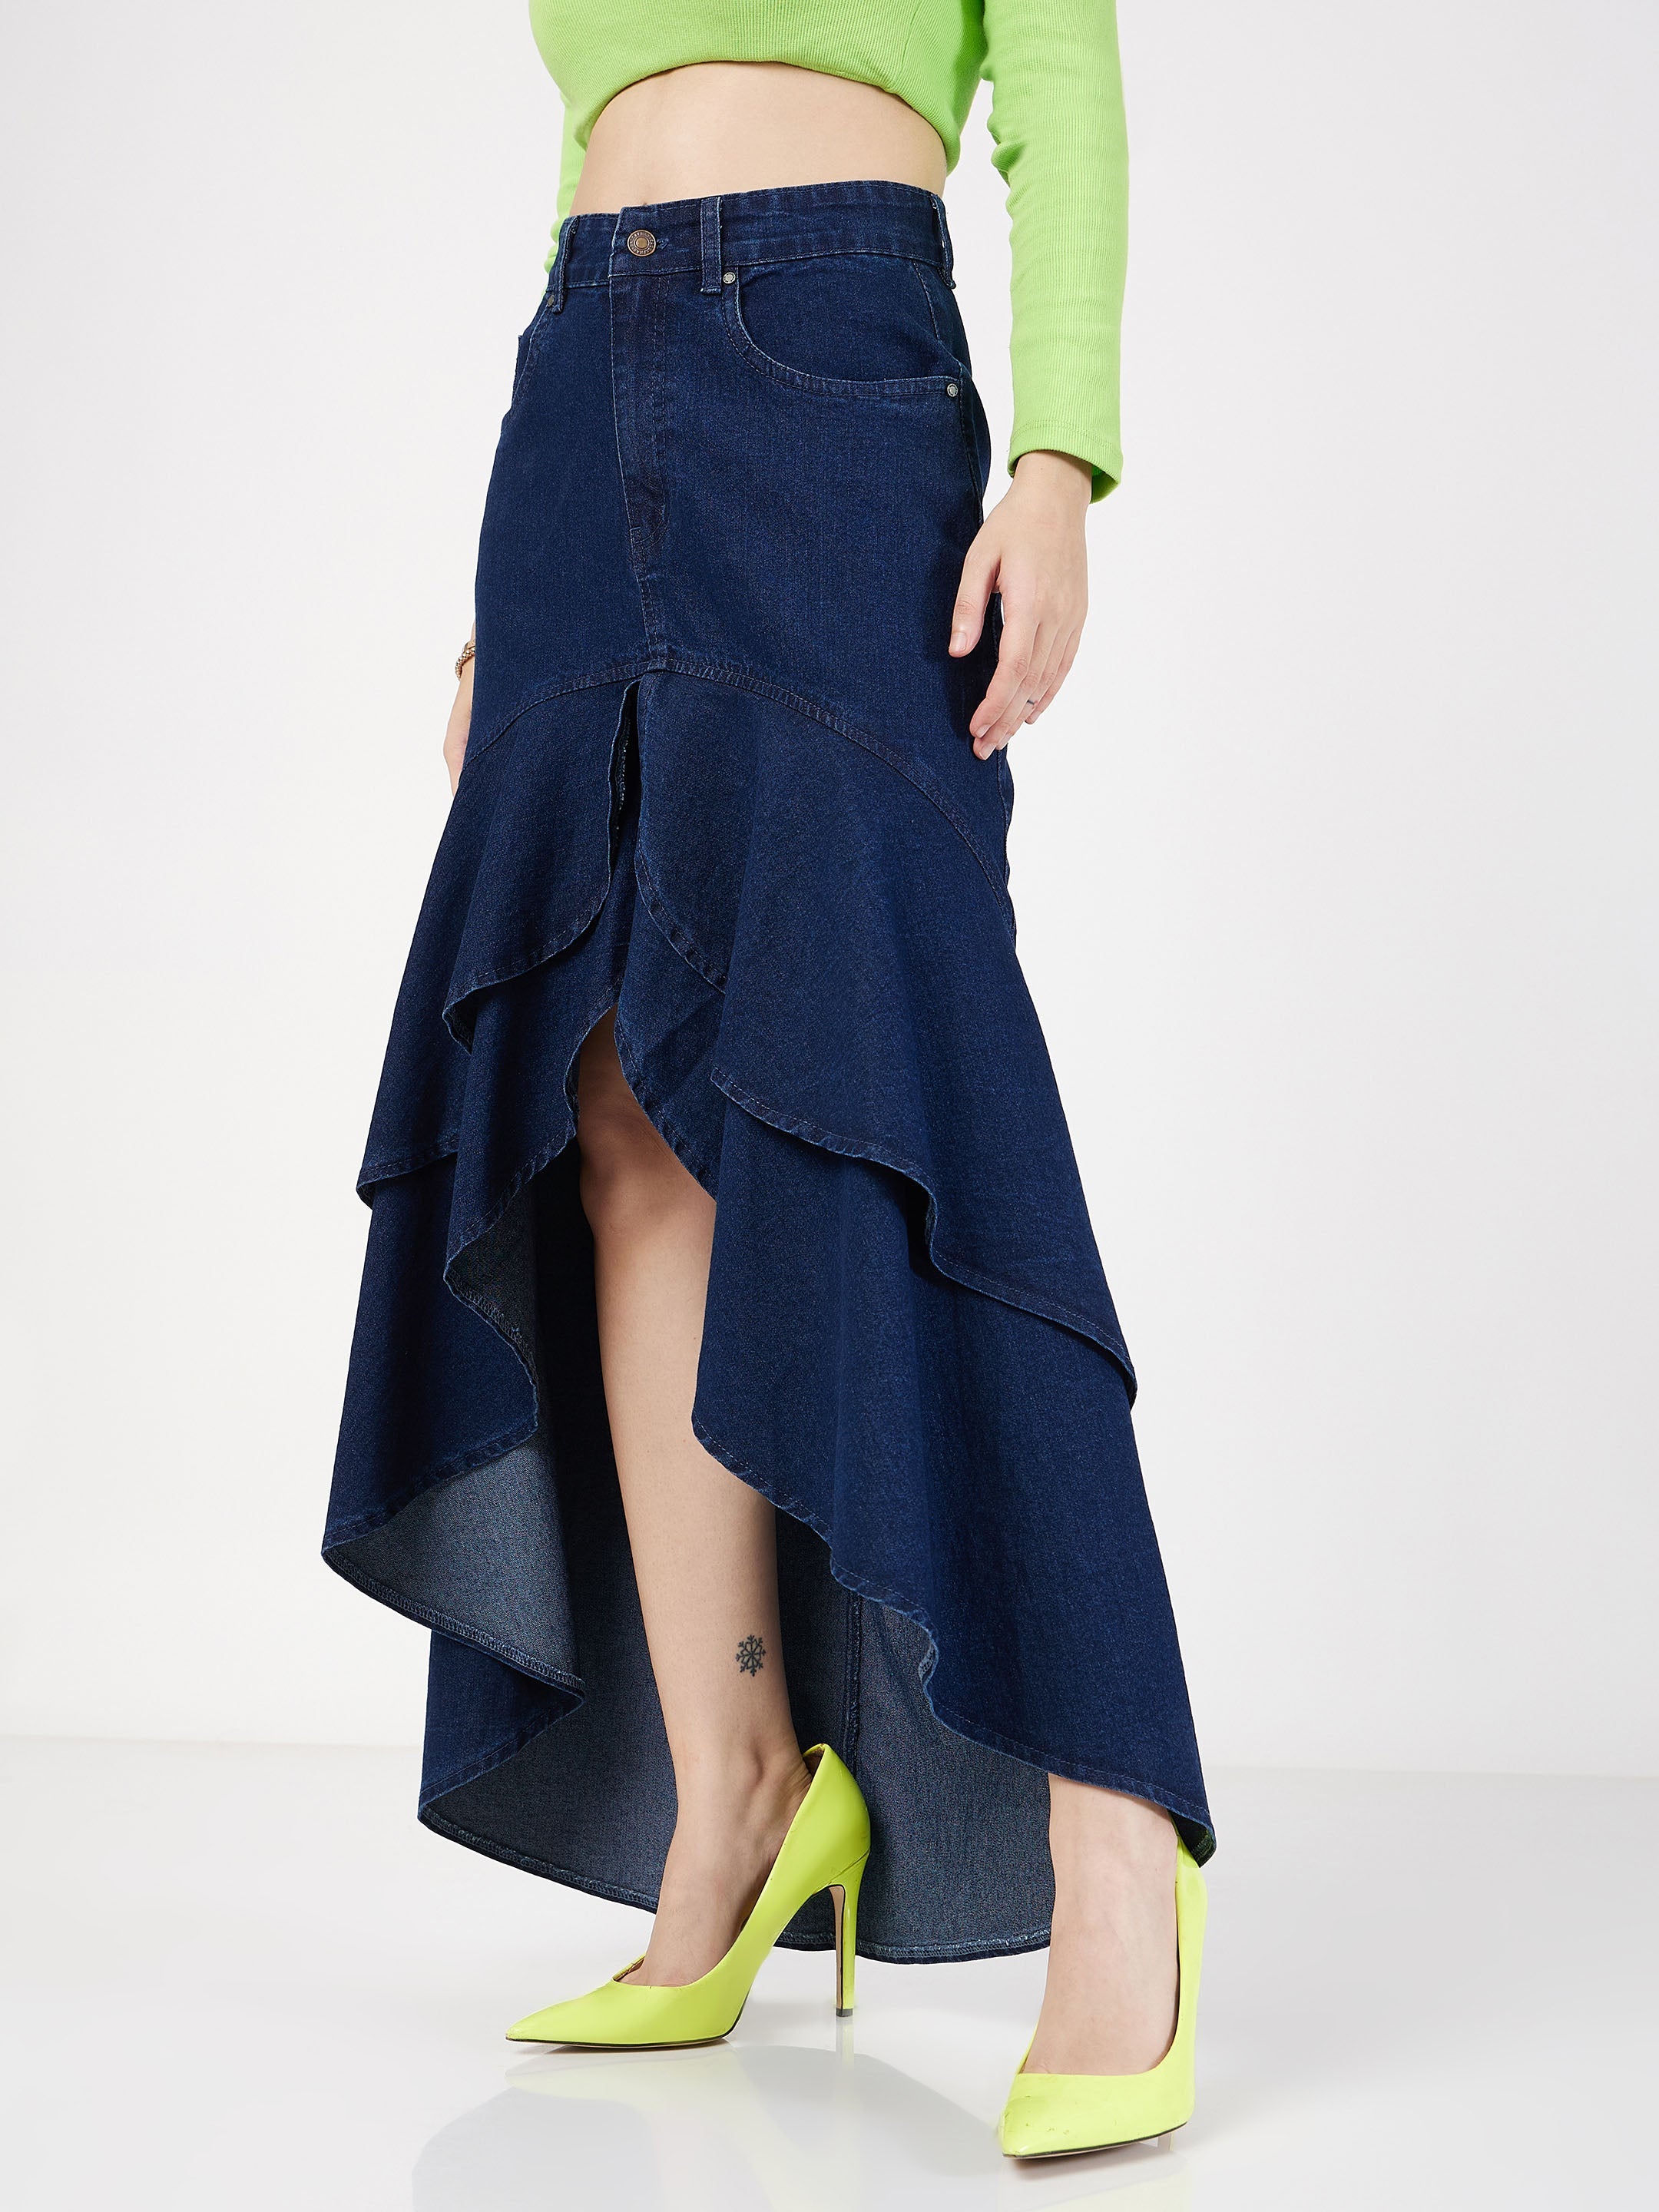 Buy Lyush Women Navy Blue Denim Ruffle High Low Skirt Online at